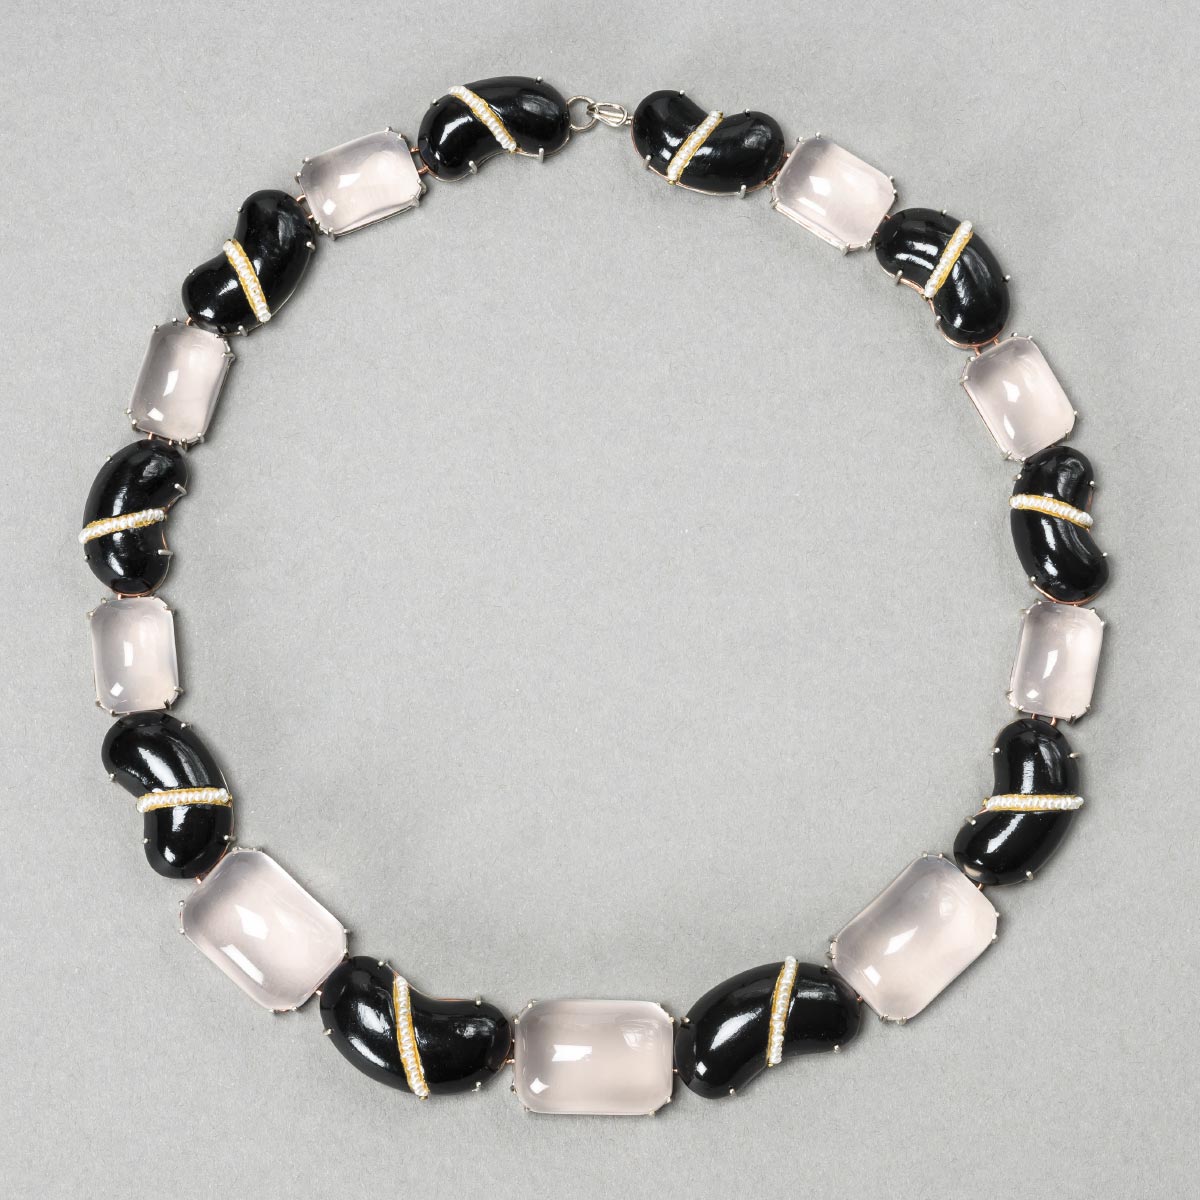 Gian Luca Bartellone Contemporary necklace Faba papier mache silver copper rose quartz pearls gold leaf 22kt